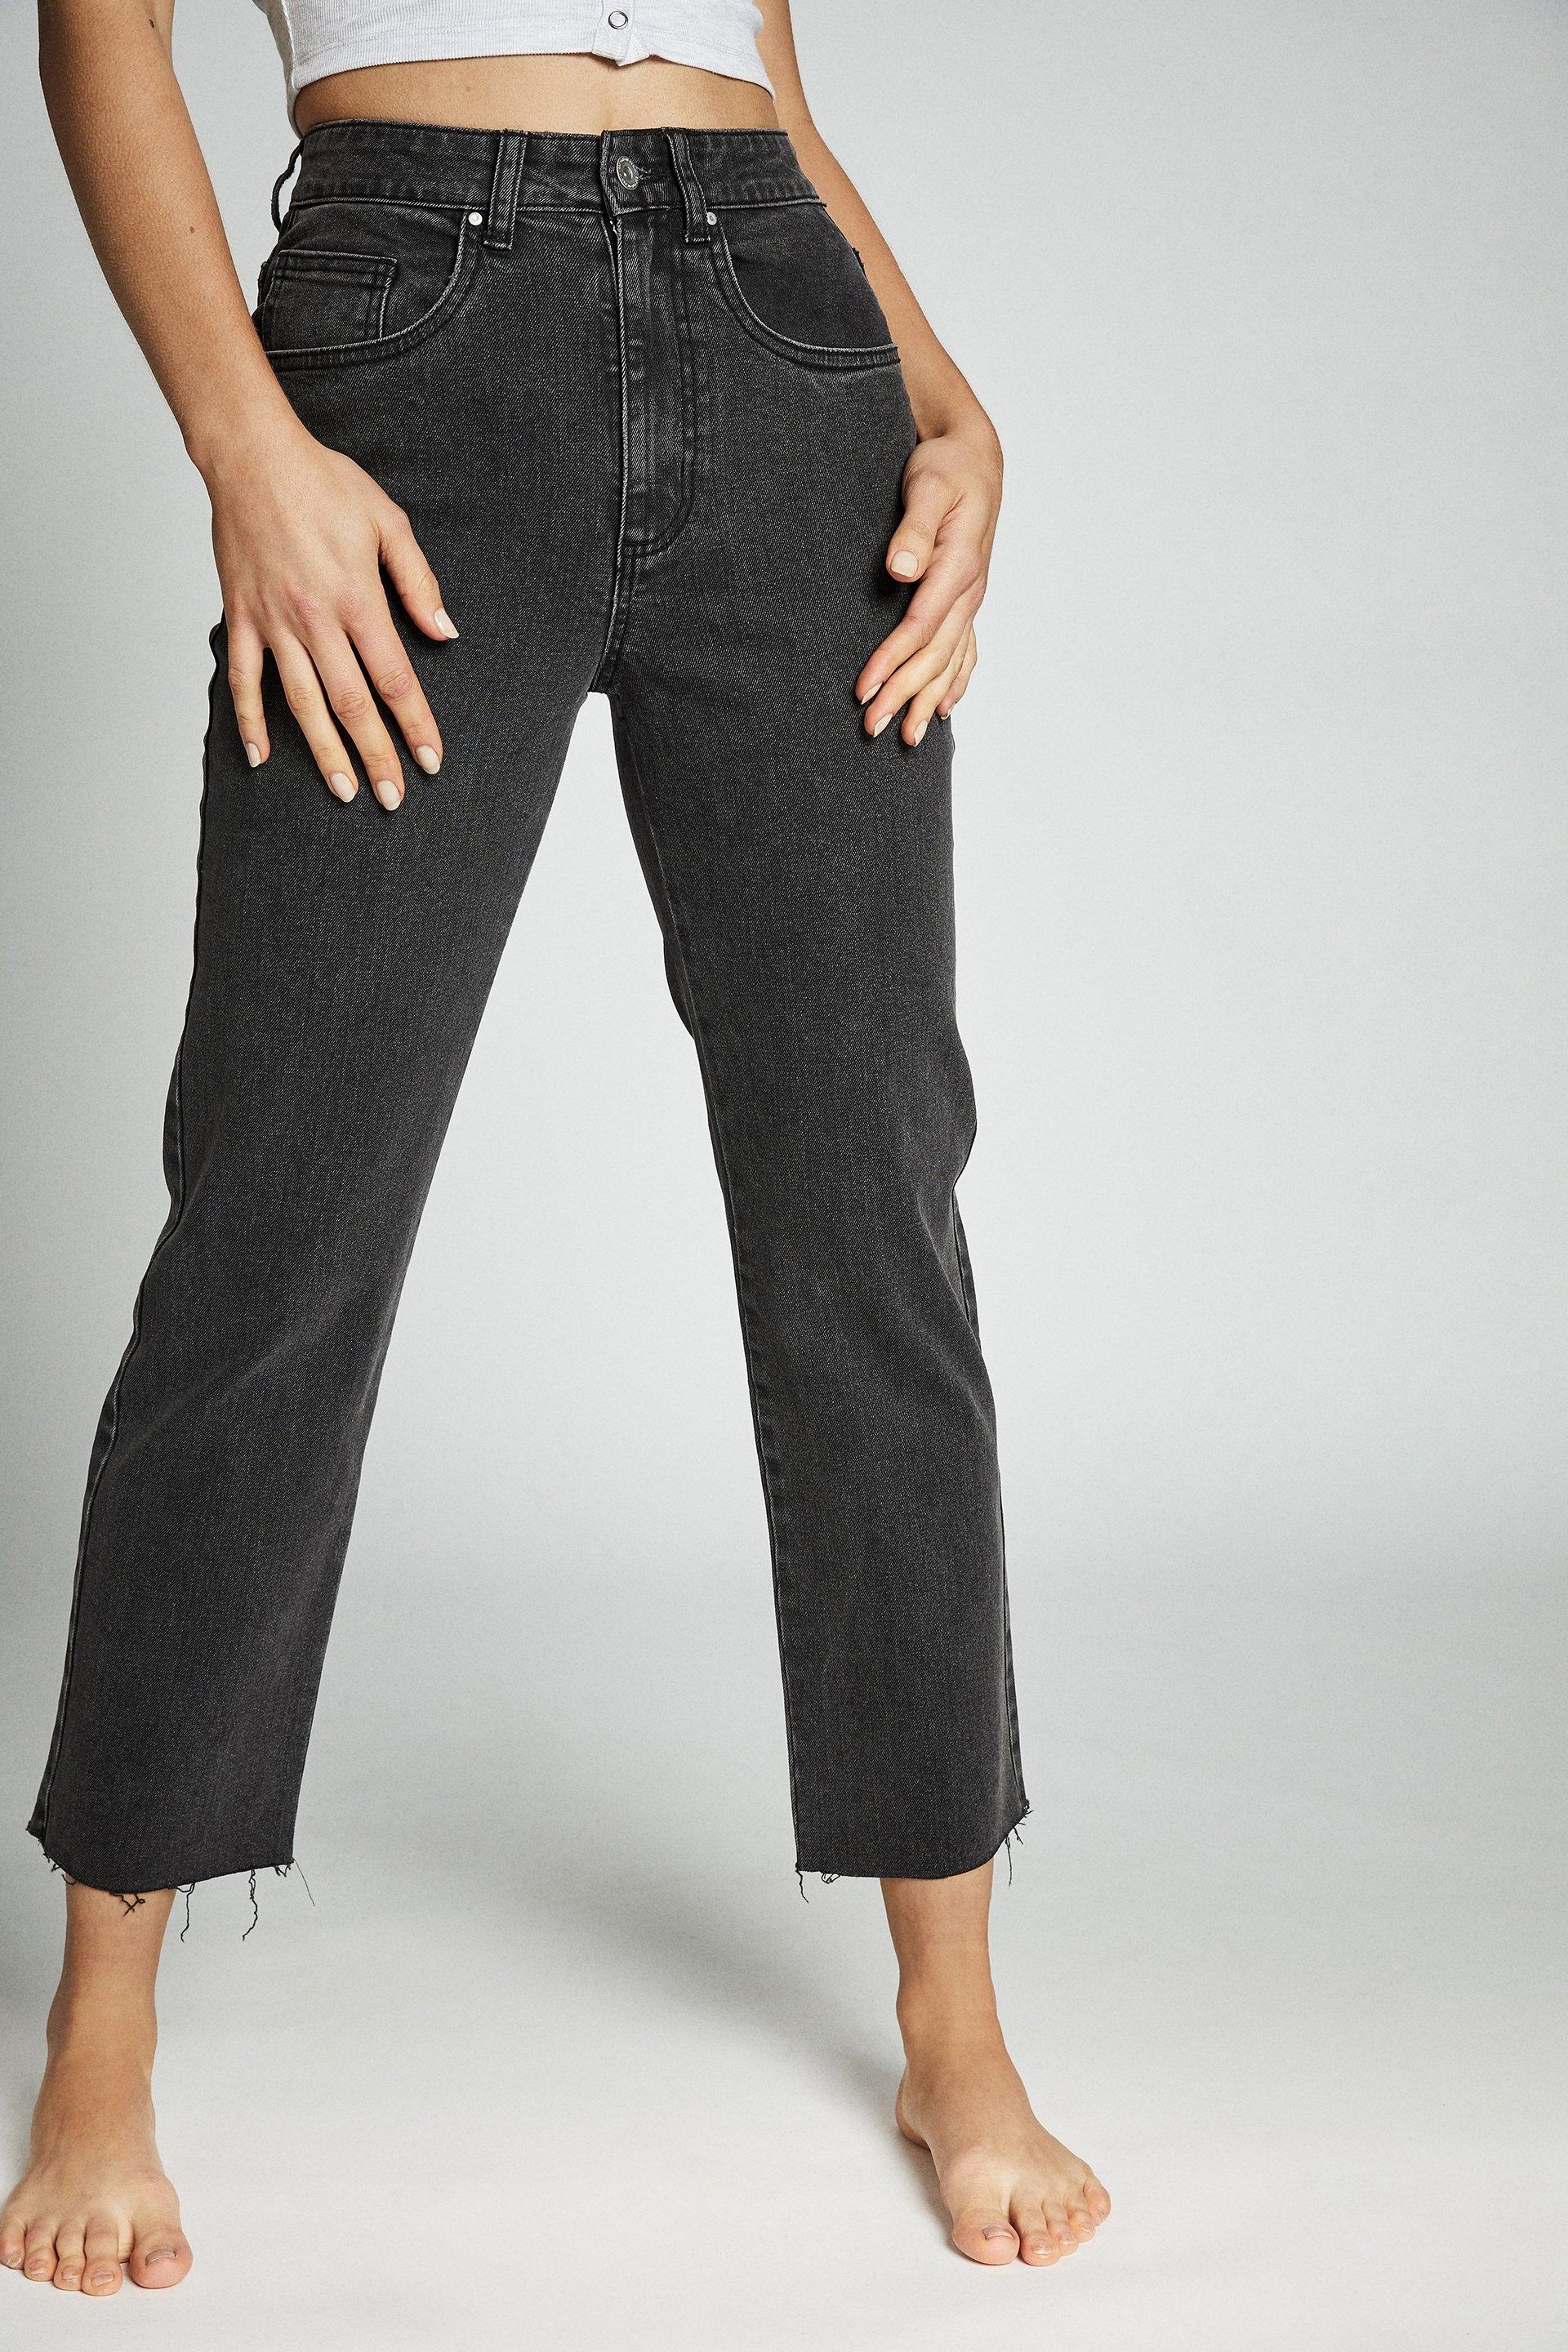 Straight stretch jean - stonewash black Cotton On Jeans | Superbalist.com